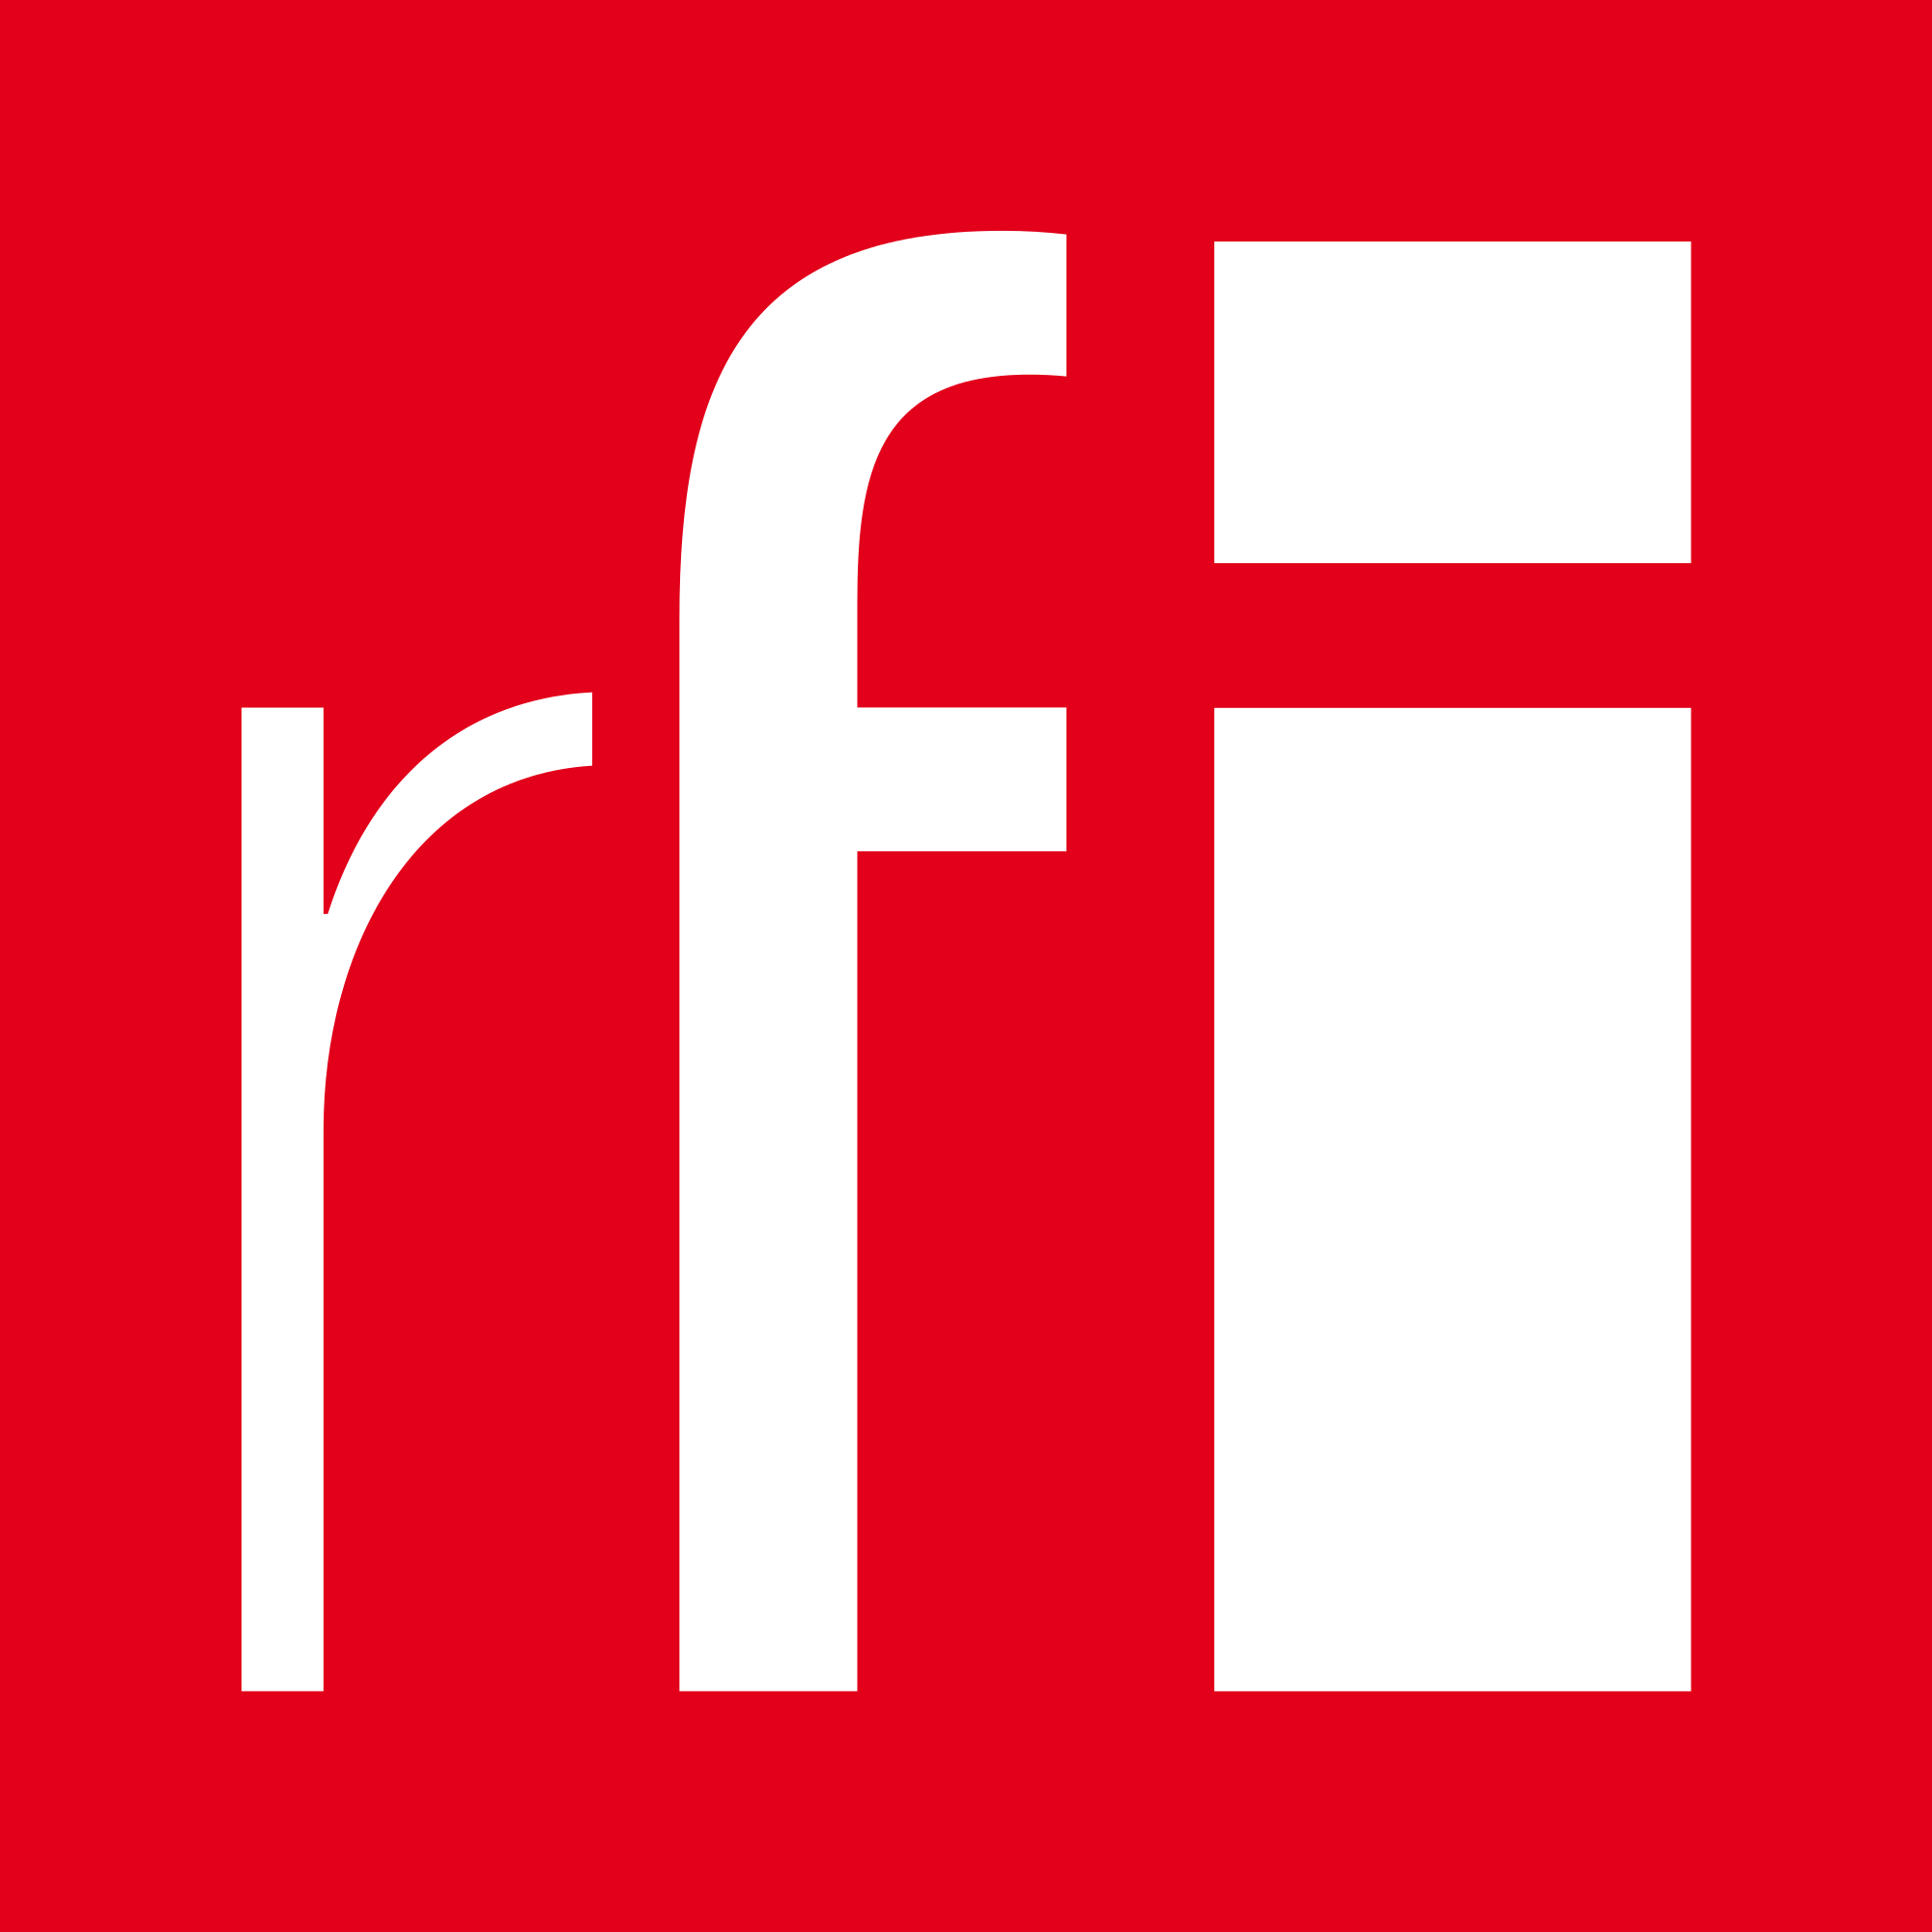 RFI Logo - File:RFI logo 2013.svg - Wikimedia Commons